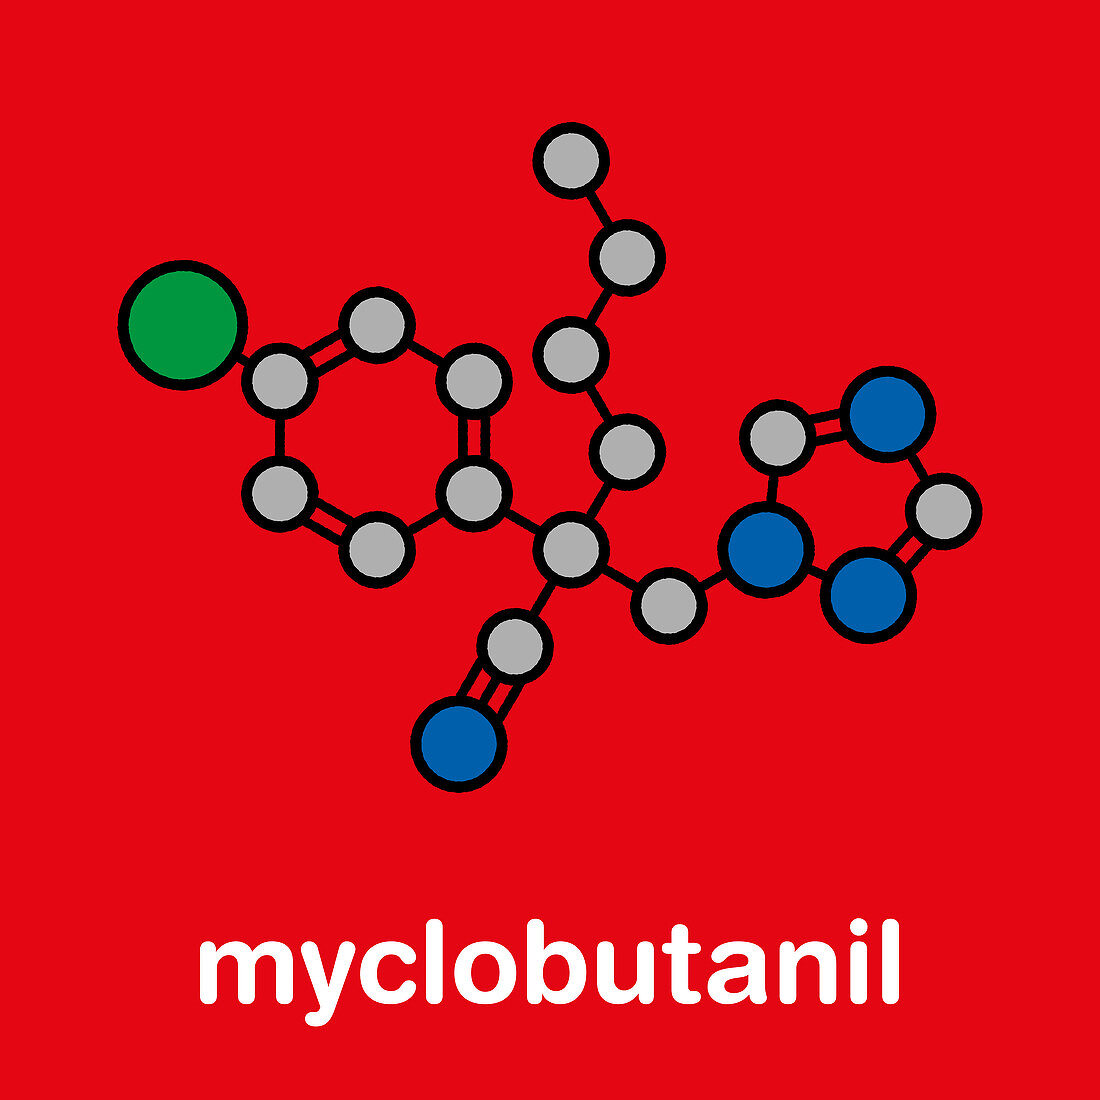 Myclobutanil antifungal molecule, illustration